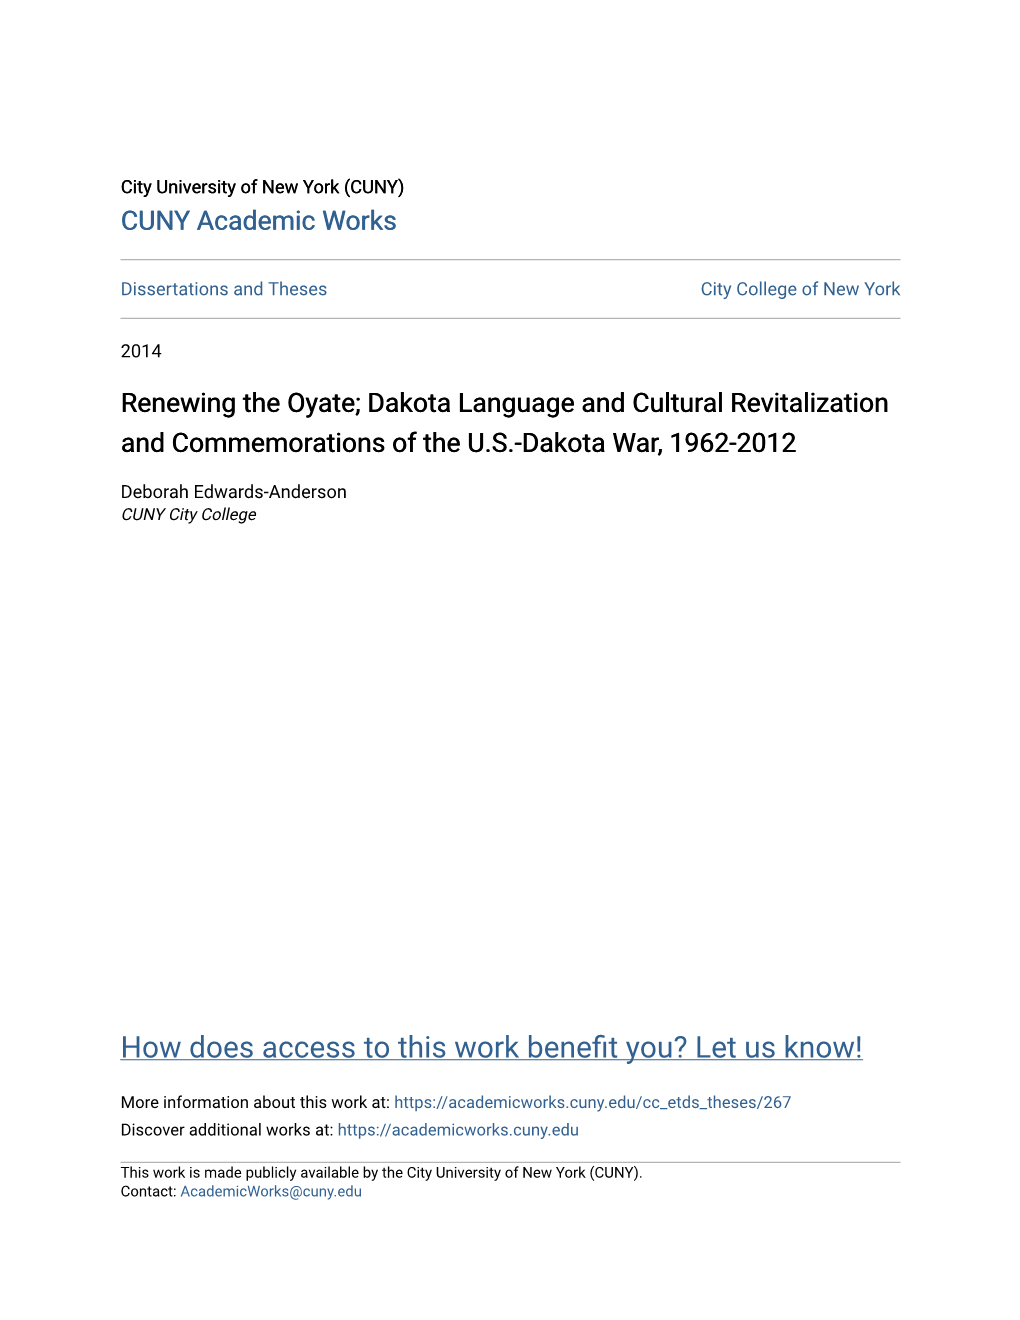 Renewing the Oyate; Dakota Language and Cultural Revitalization and Commemorations of the U.S.-Dakota War, 1962-2012